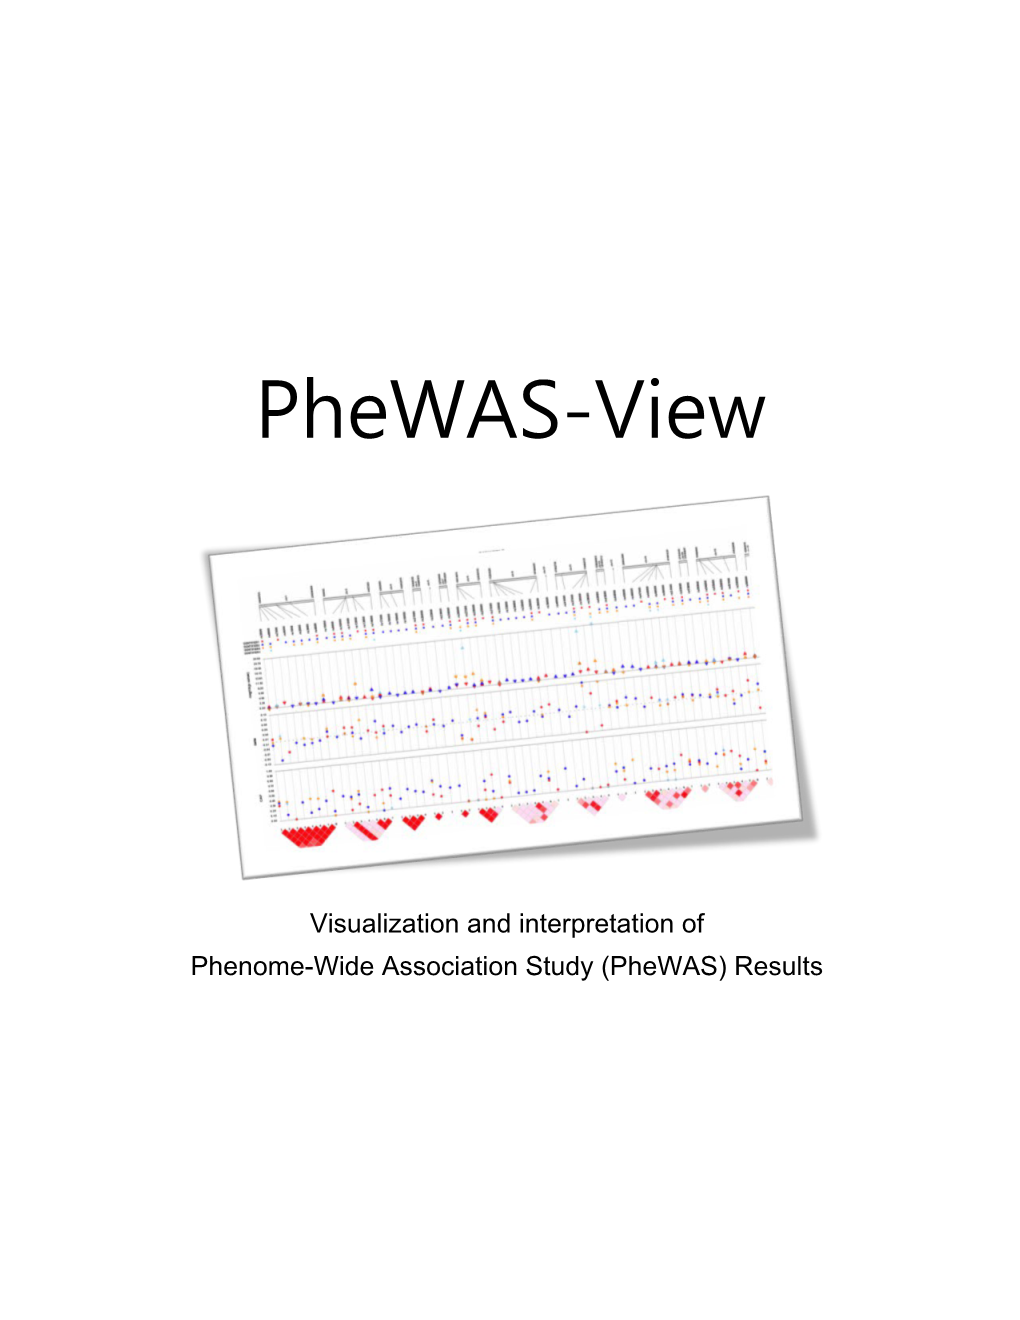 Phenome-Wide Association Study (Phewas) Results